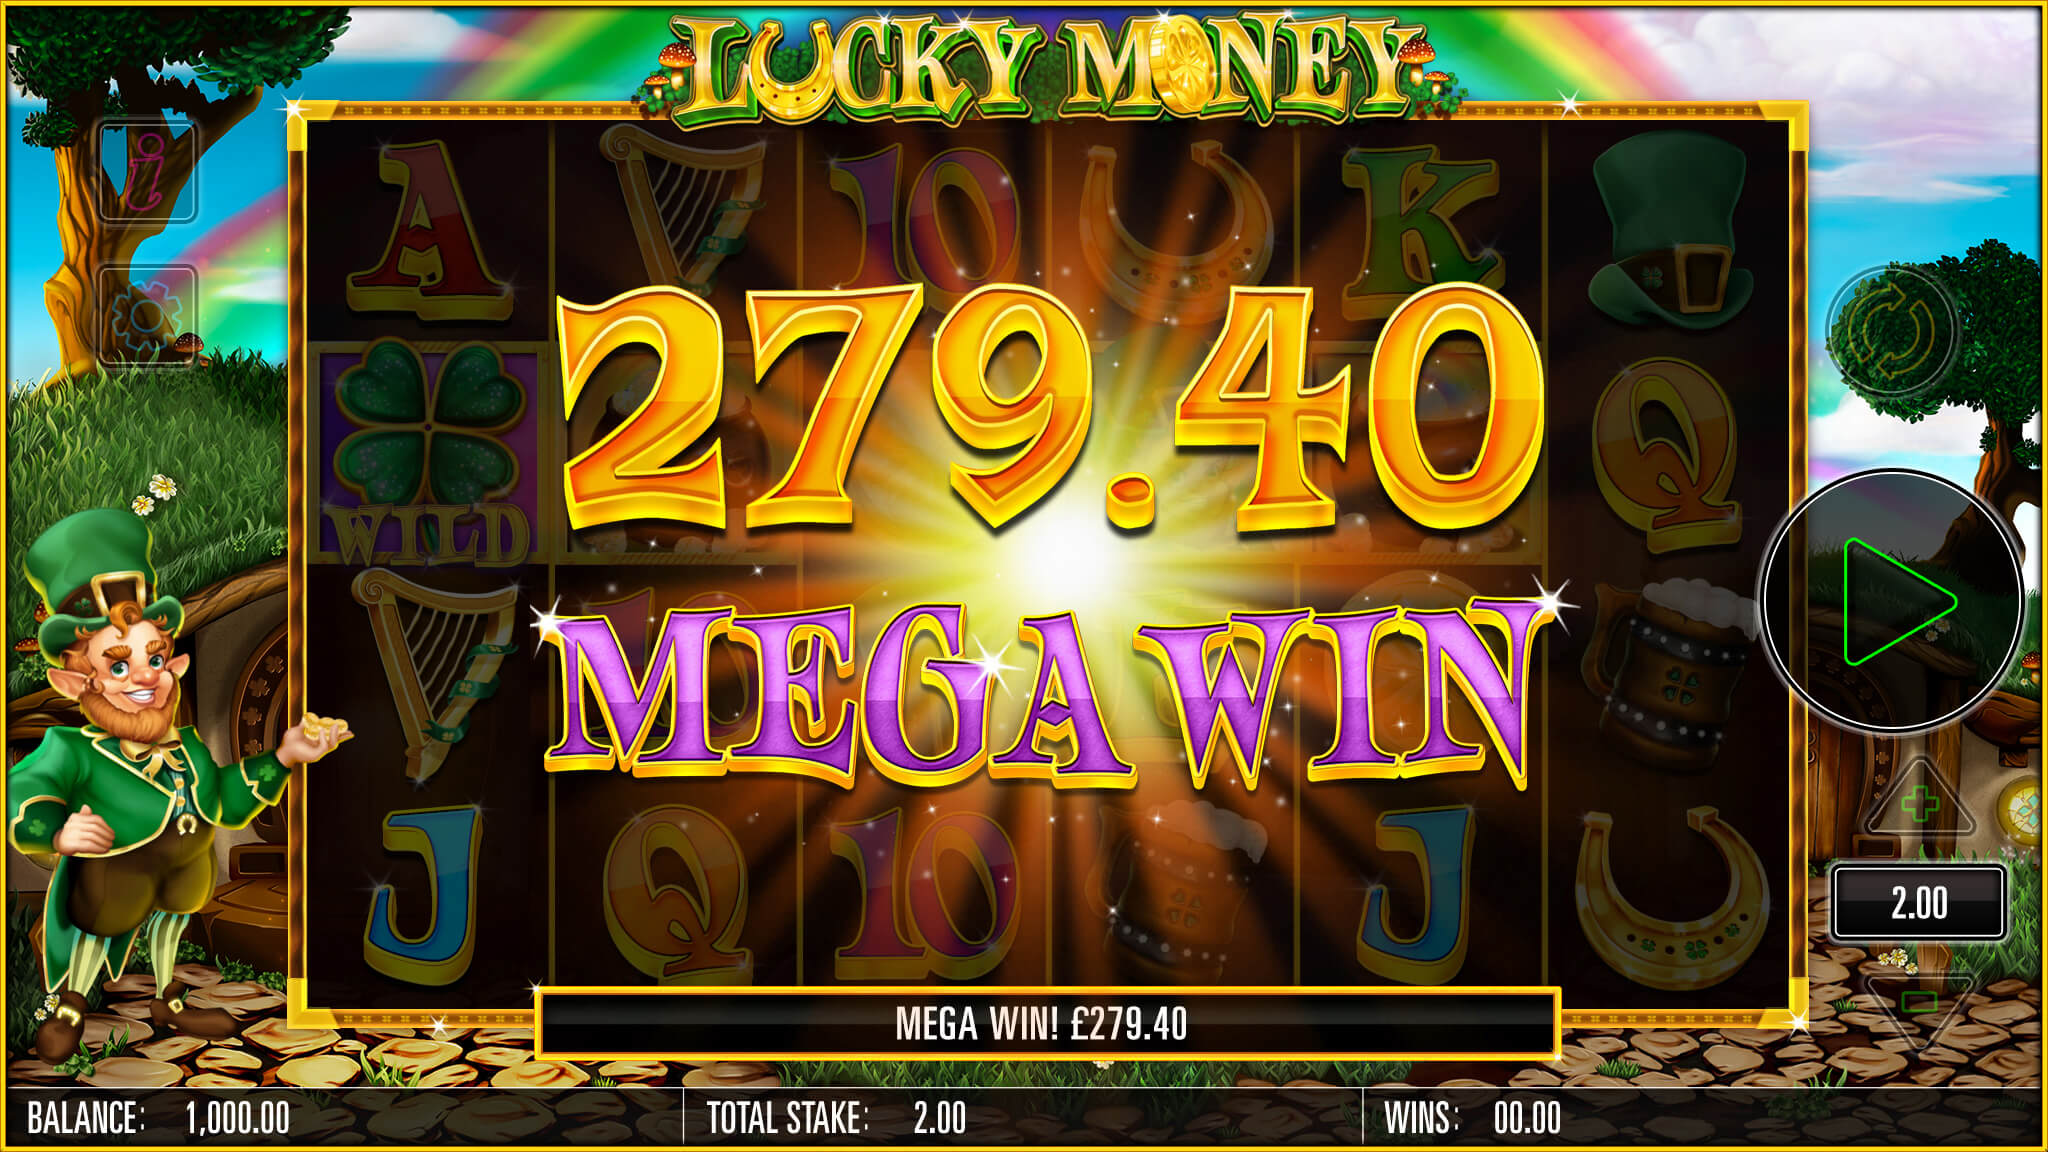 Lucky Money slot